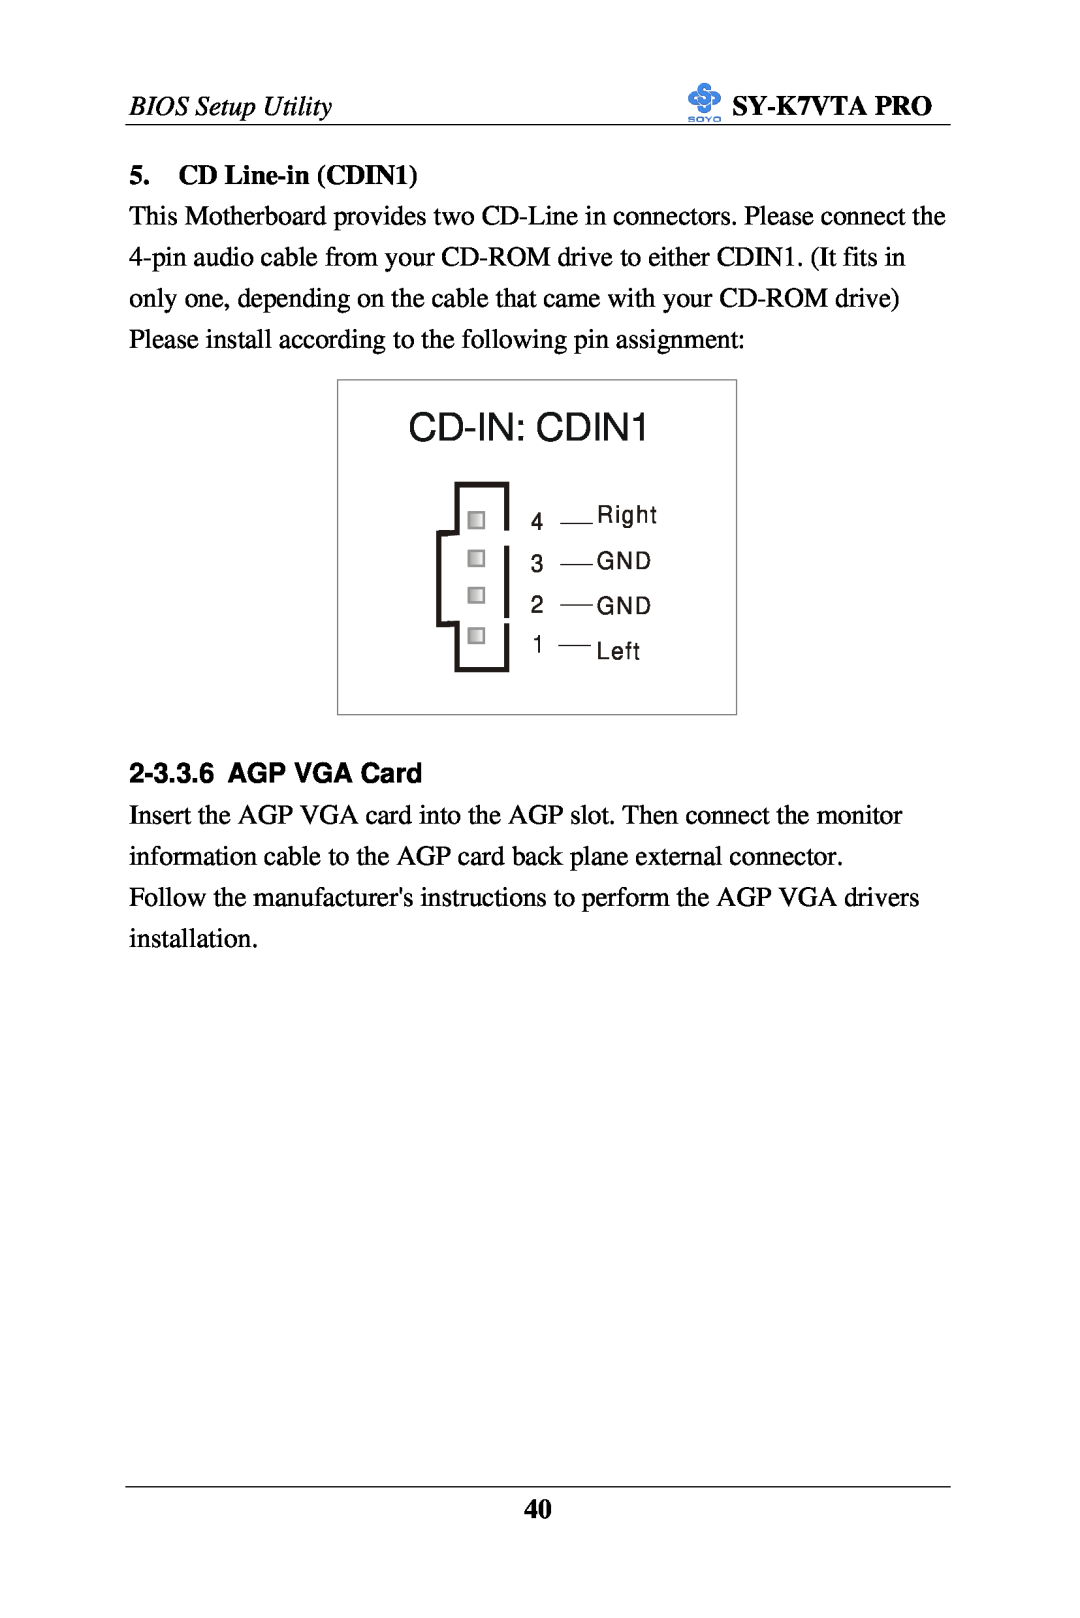 SOYO SY-K7VTA PRO user manual AGP VGA Card, CD-IN CDIN1, BIOS Setup Utility 